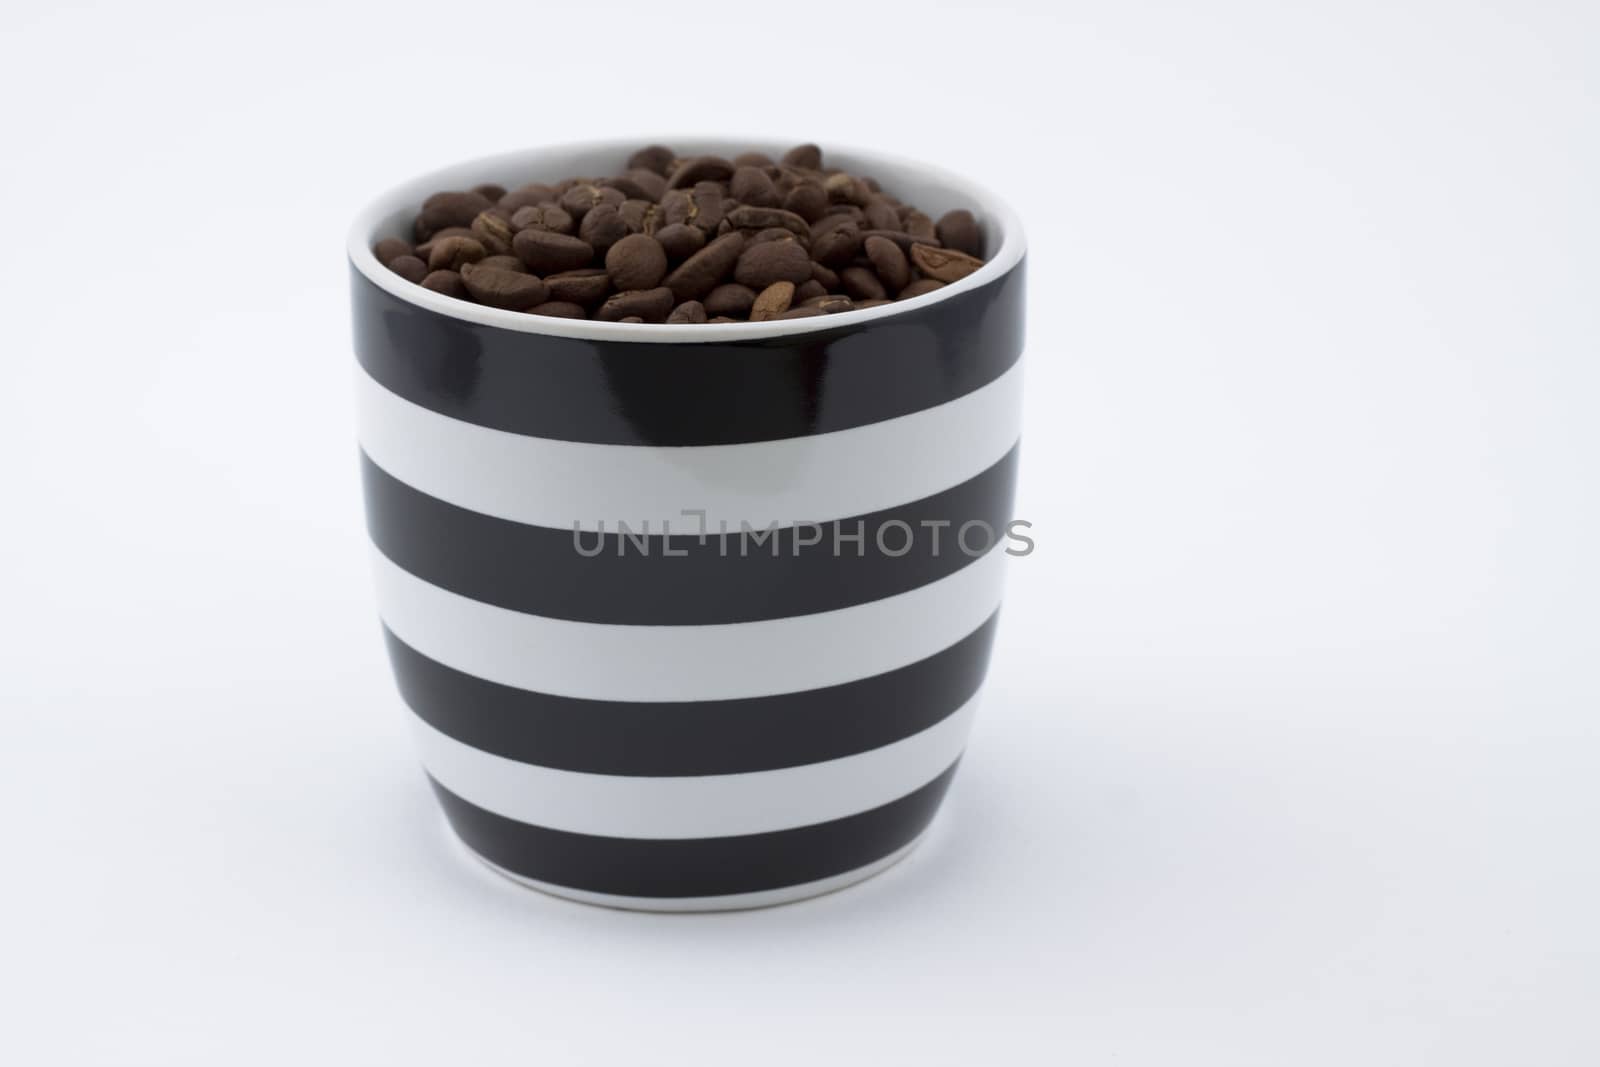 B&W mug by orcearo